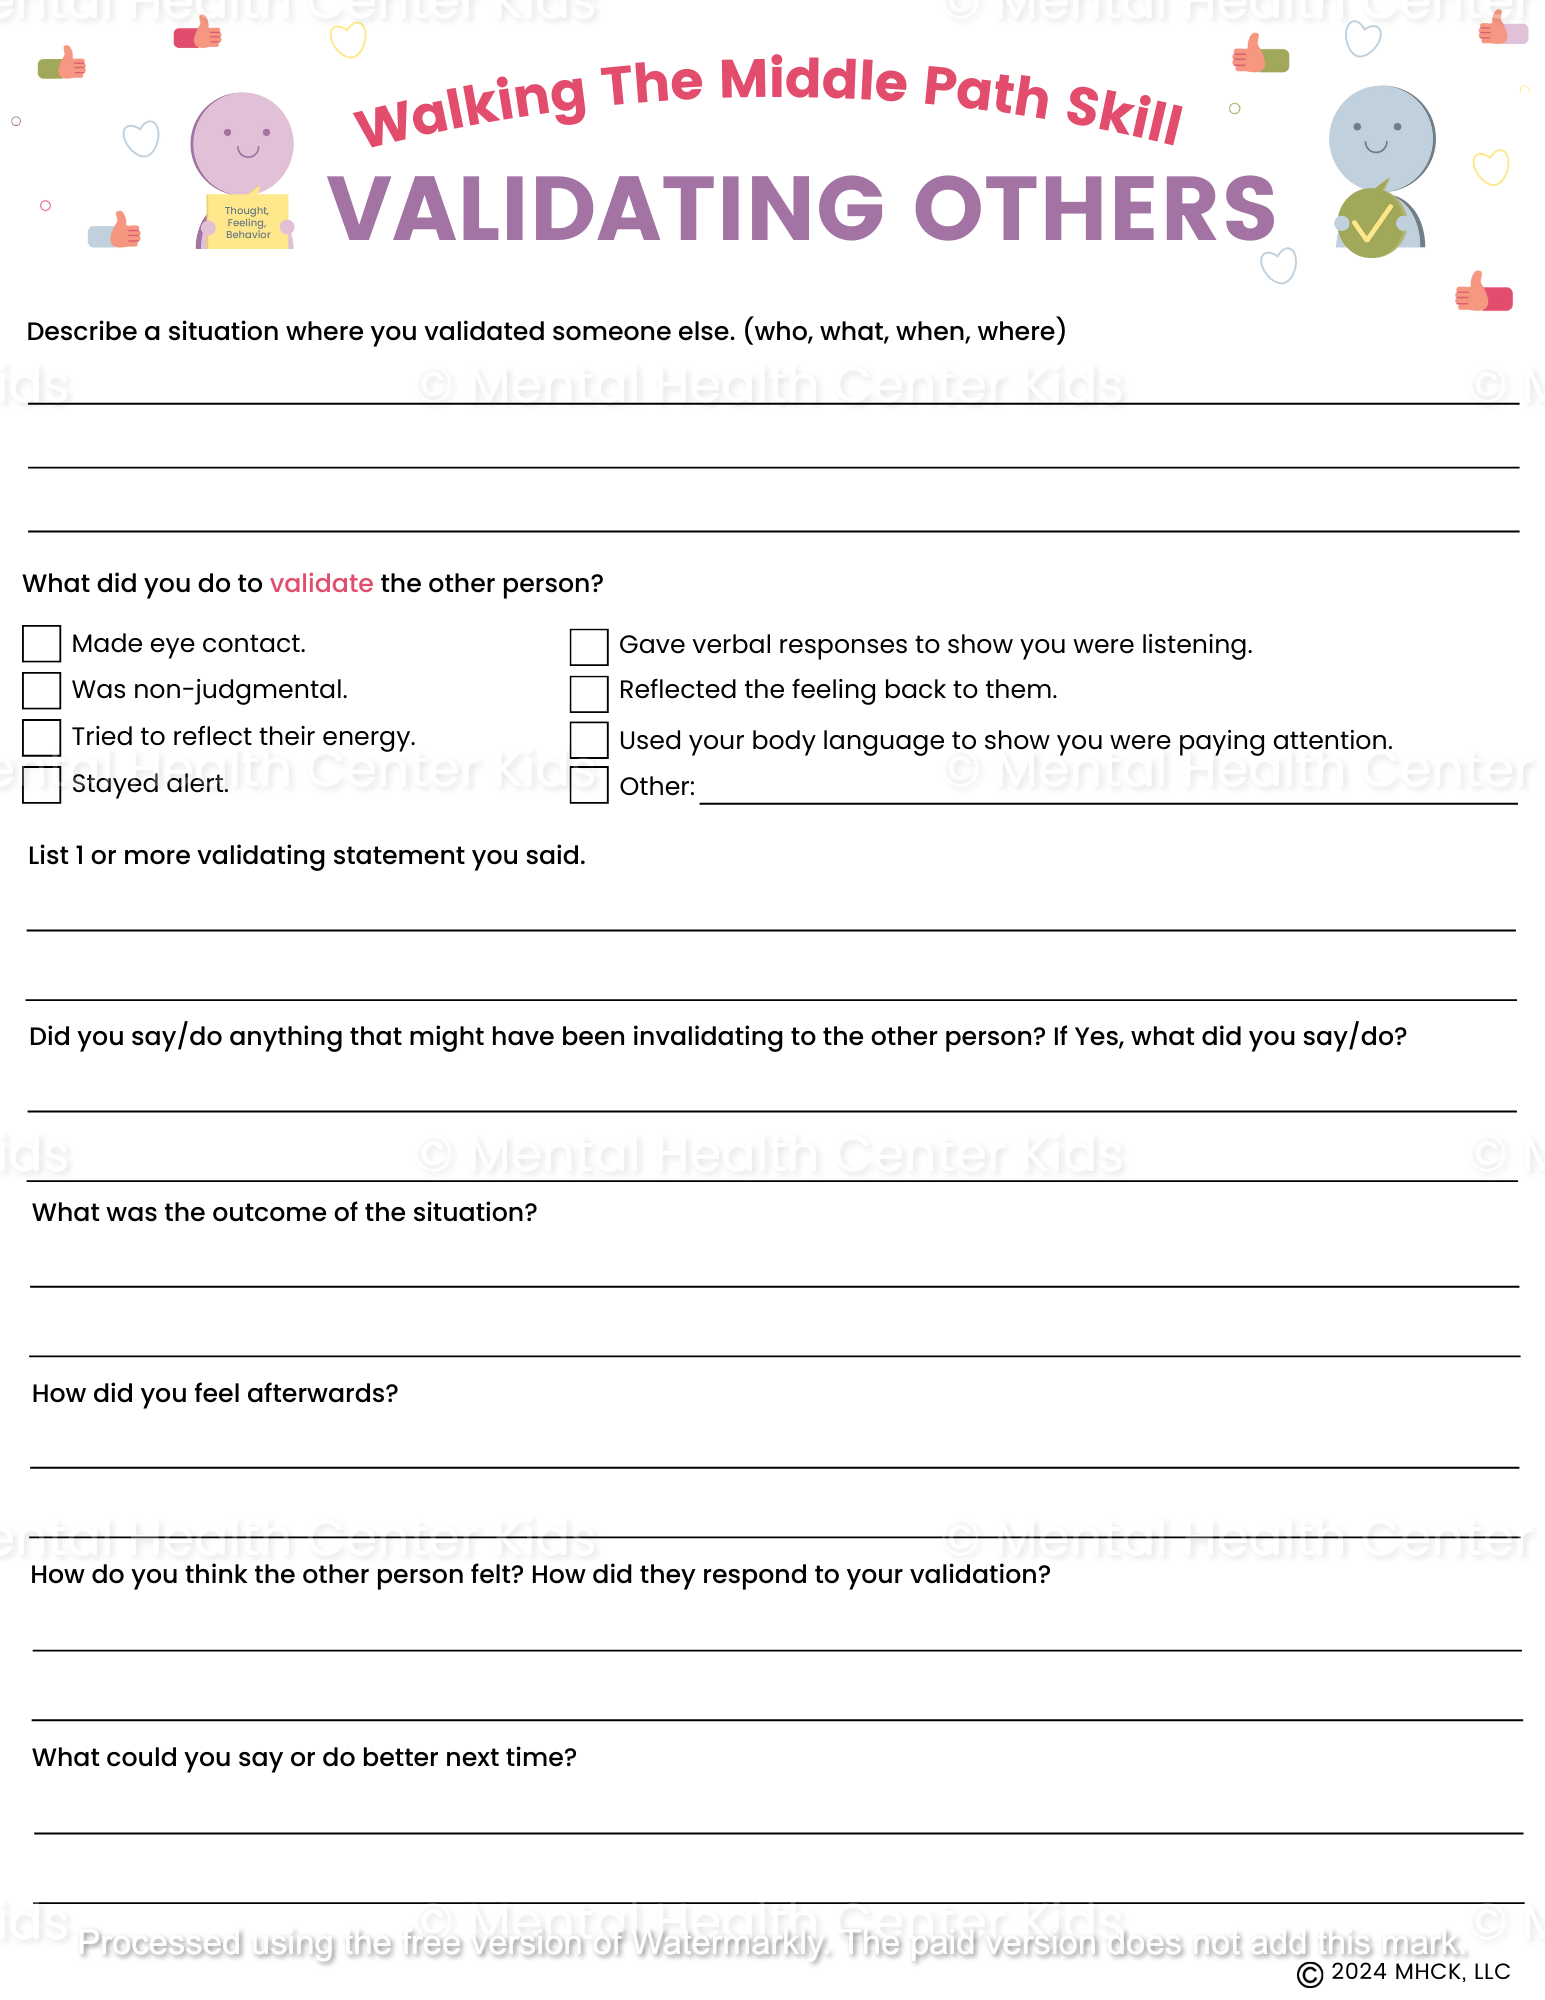 validating others dbt worksheet